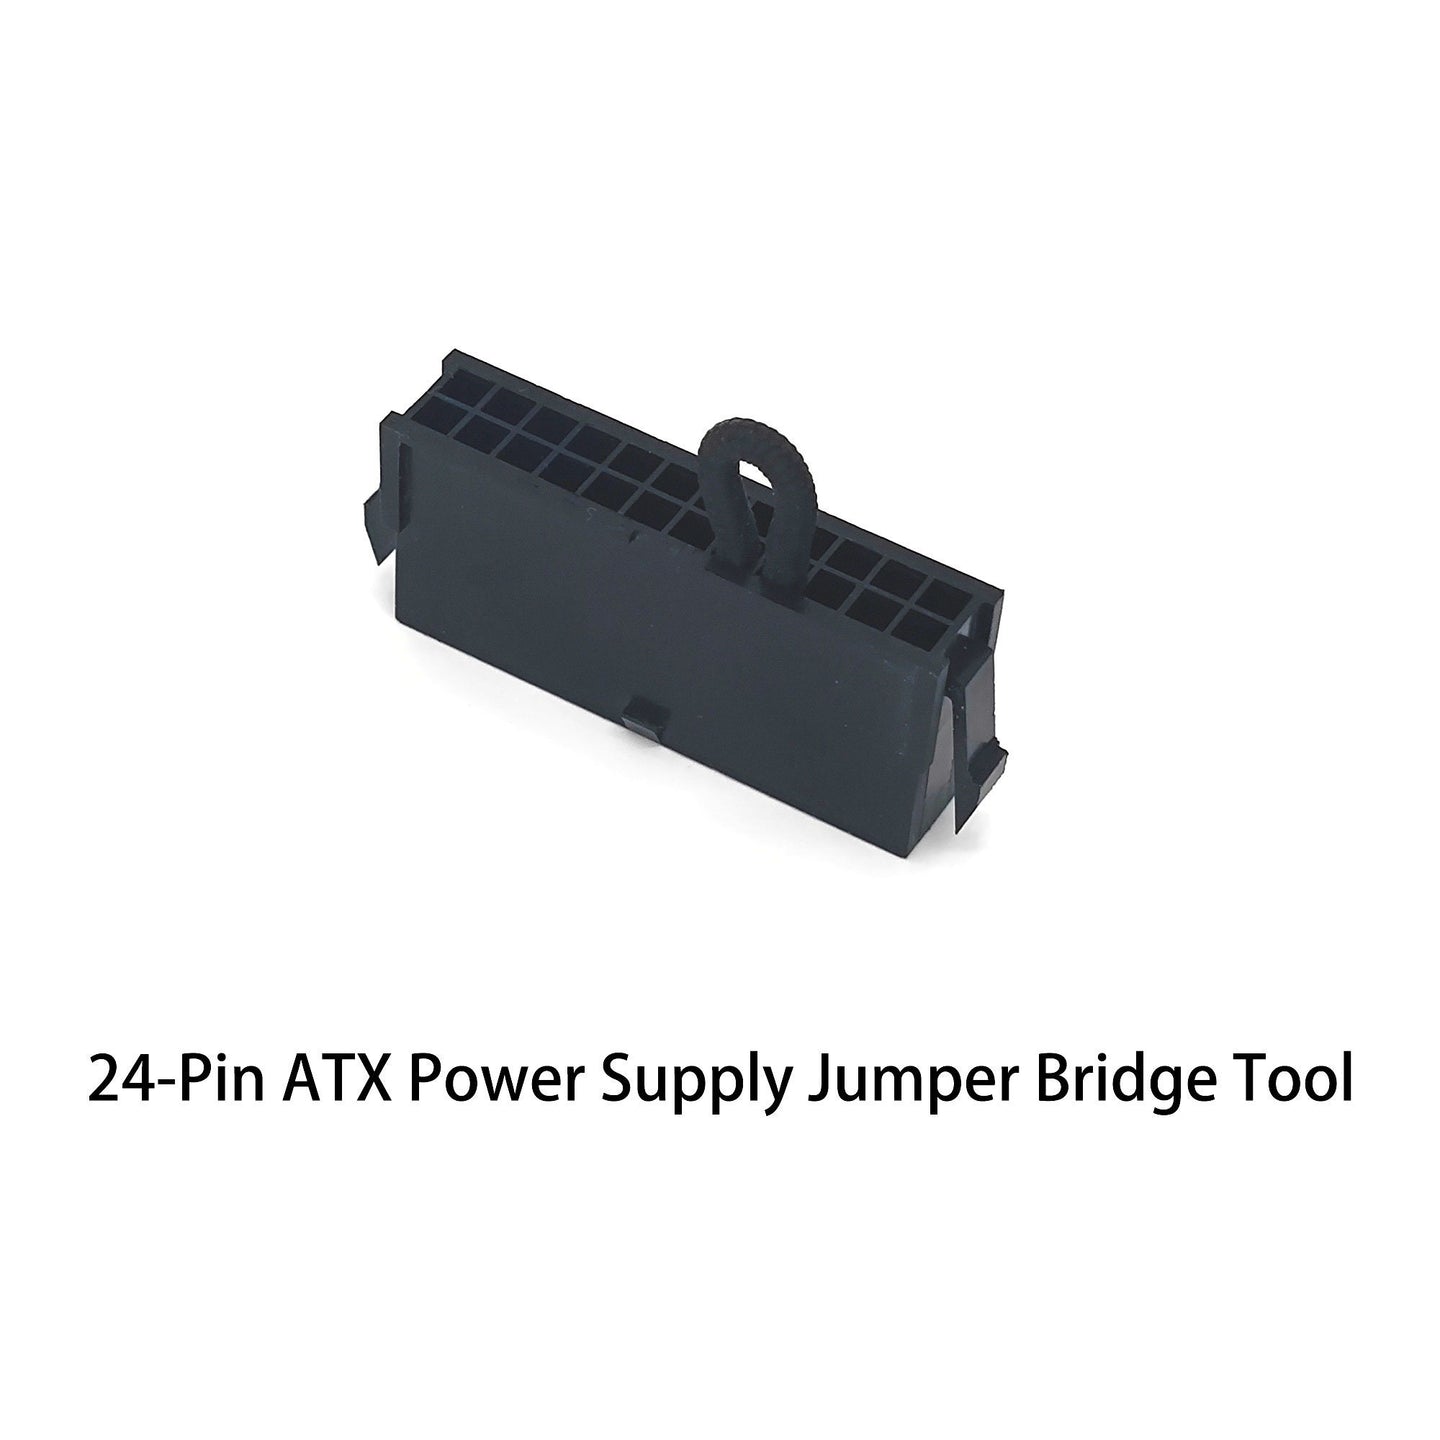 Dreambigbyray customized 24-Pin ATX EPS PSU Power Supply Jumper Bridge Tool Starter Tester